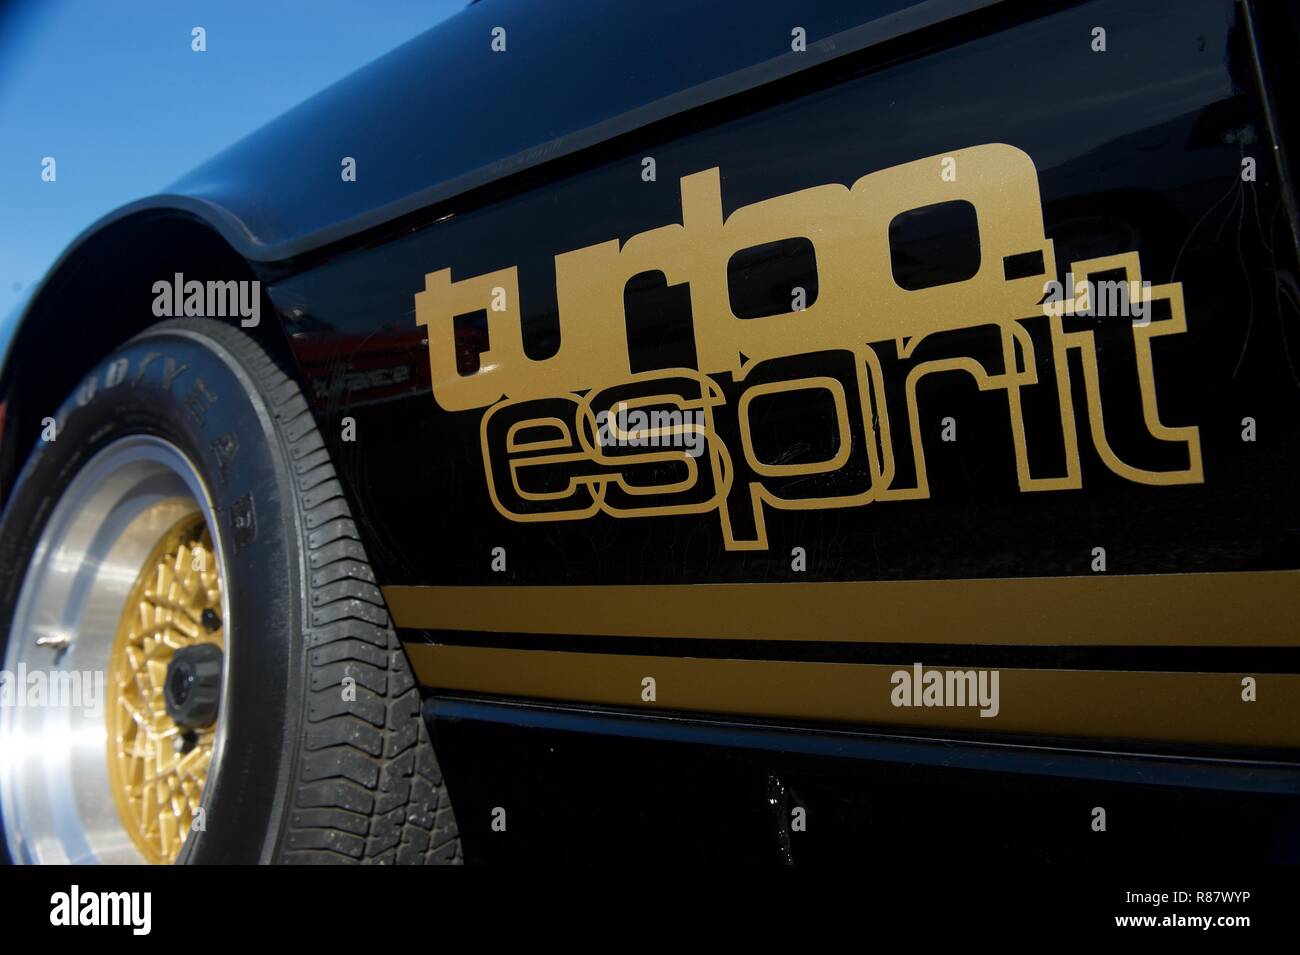 Lotus Esprit grafica turbo Foto Stock